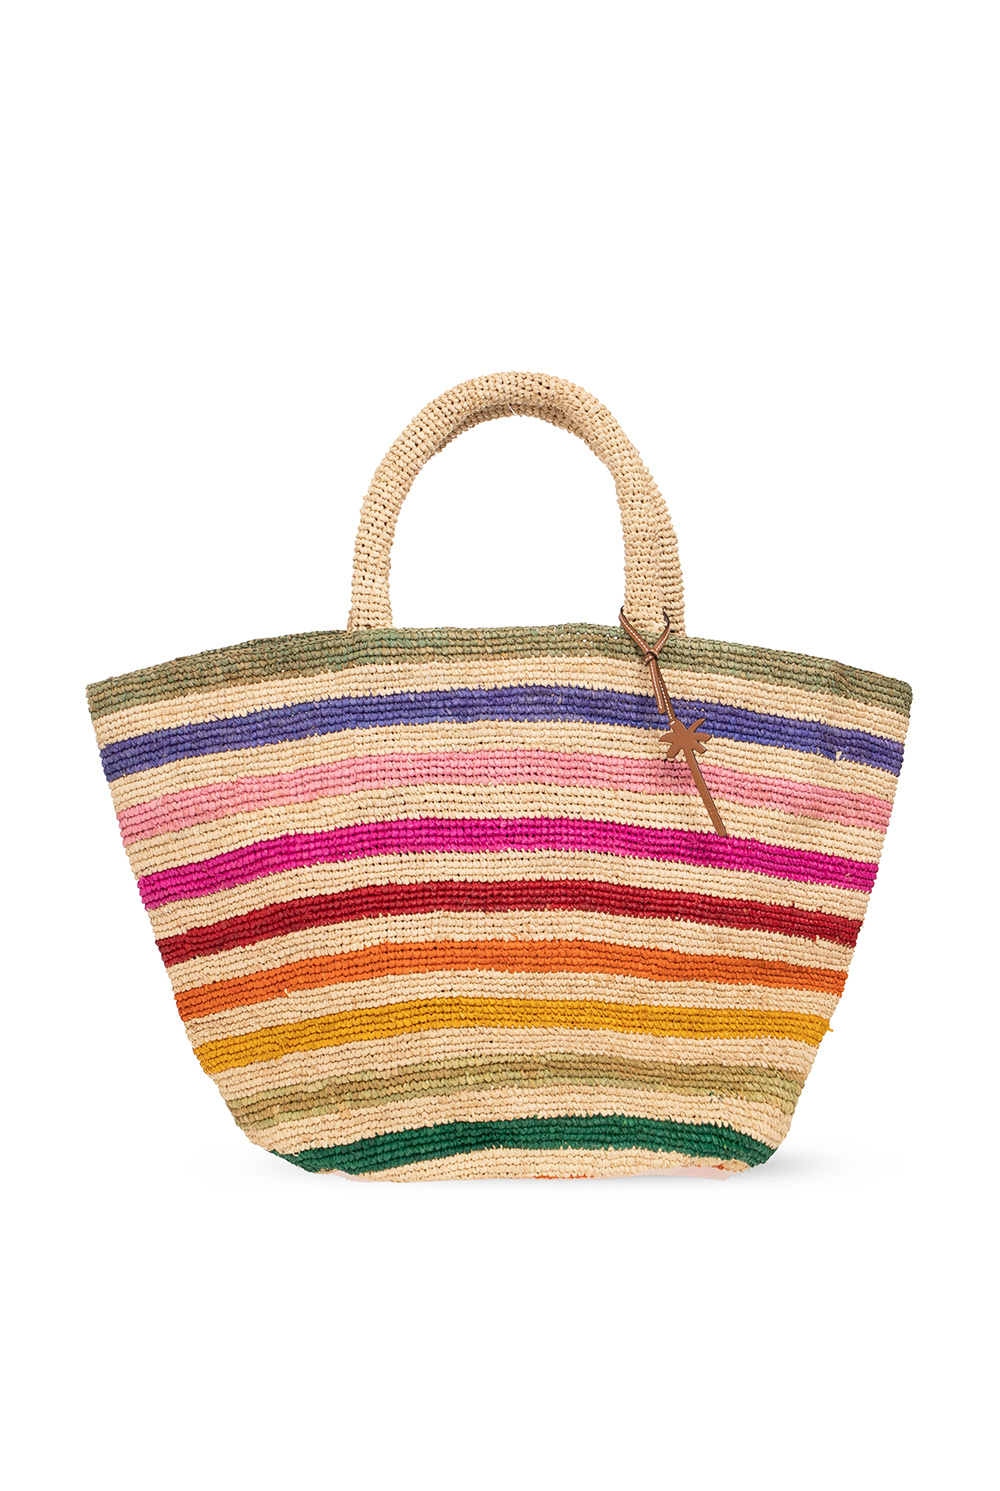 Manebí ‘Summer’ shopper bag